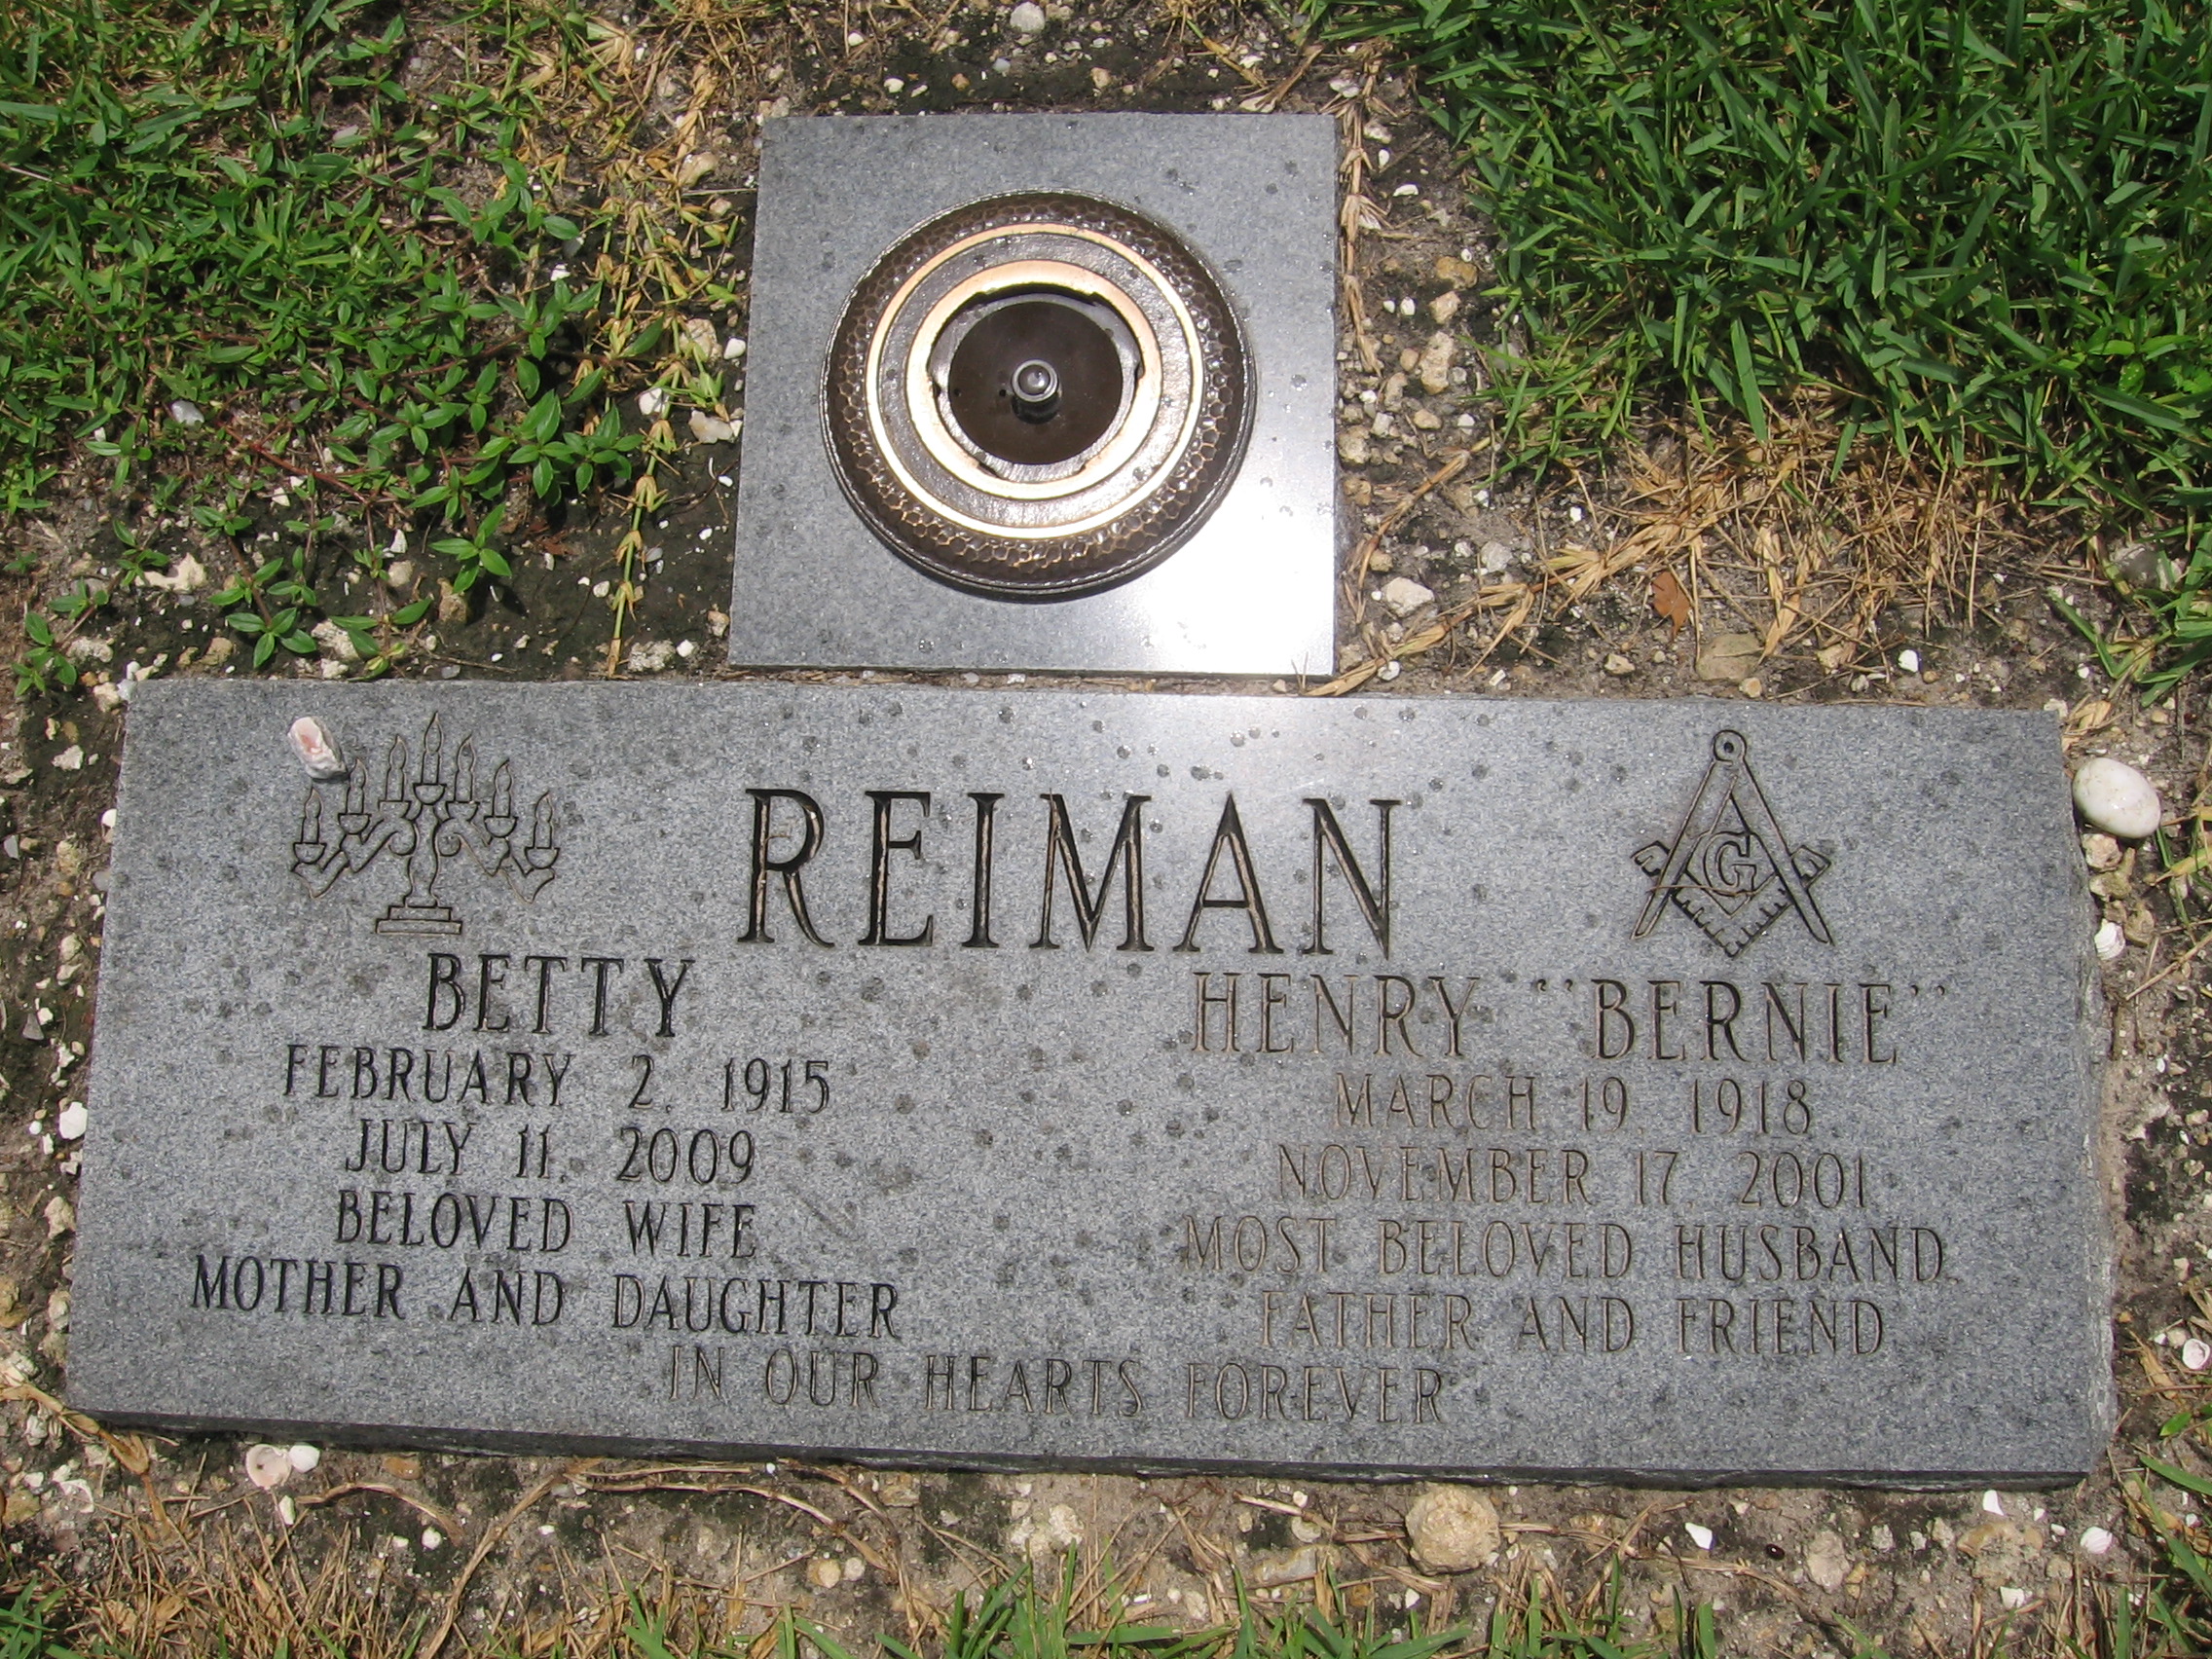 Betty Reiman